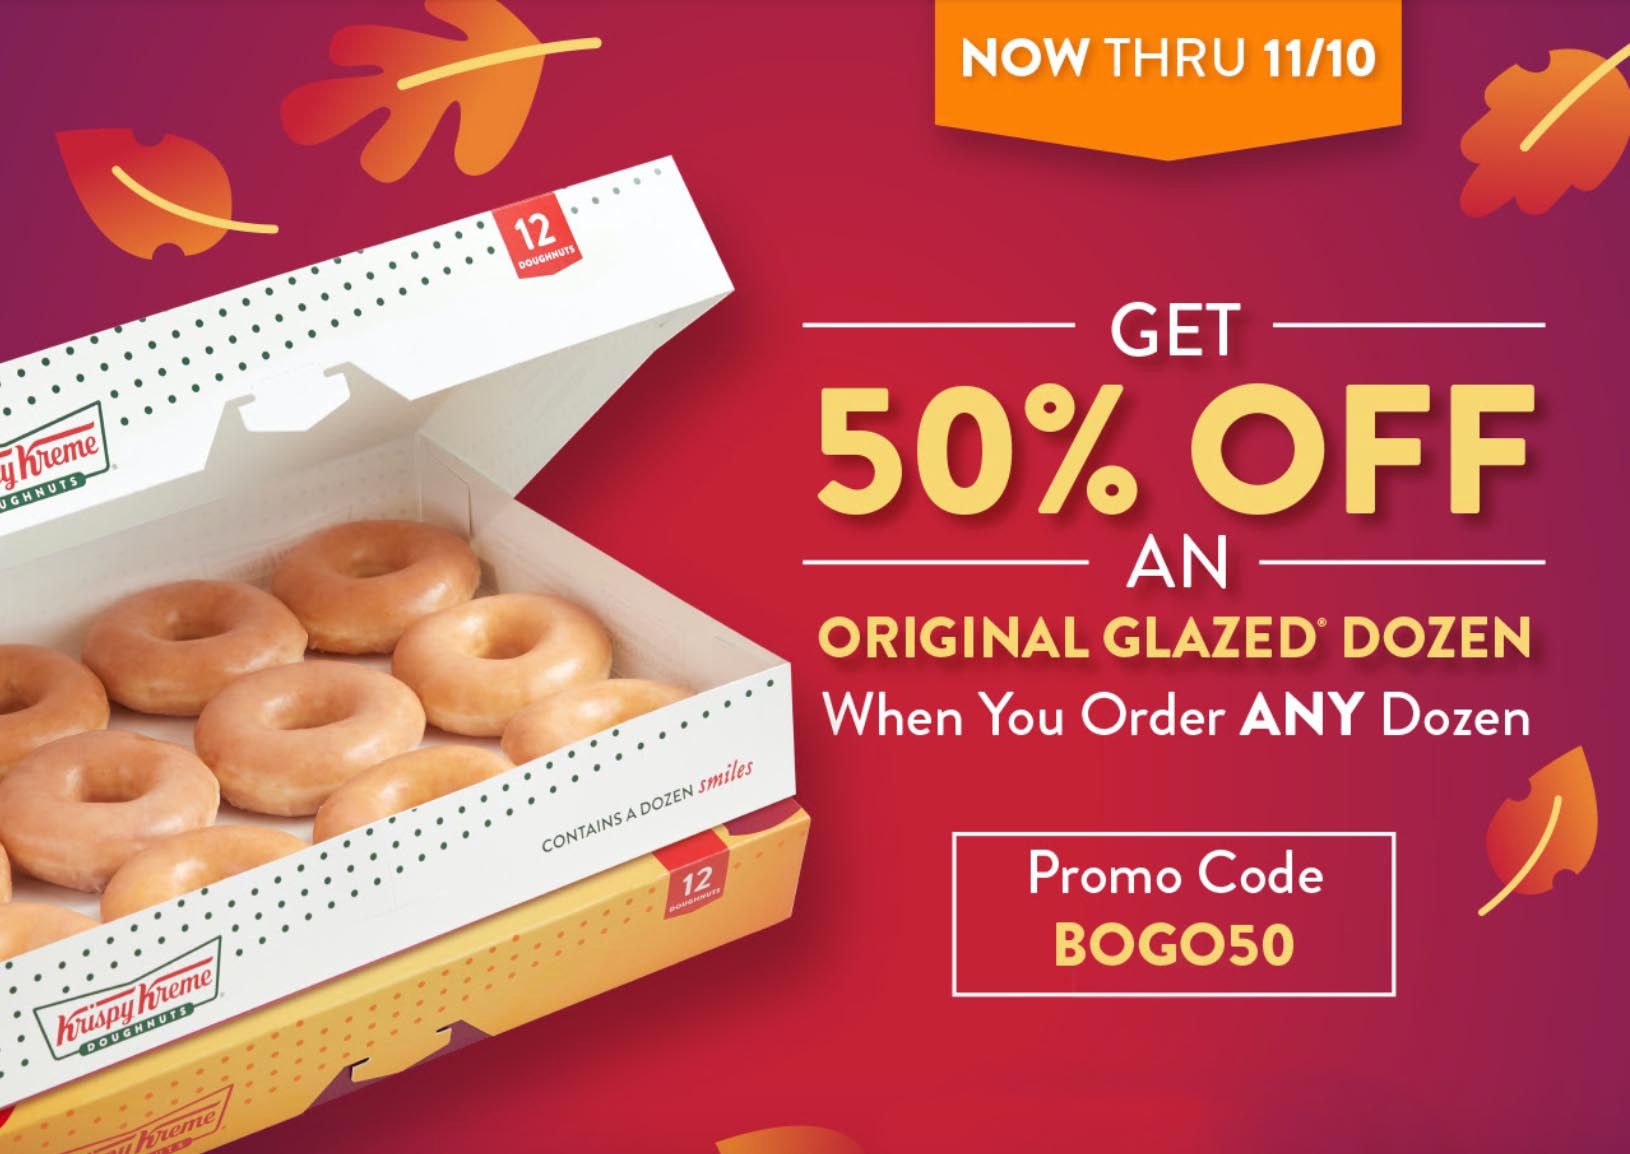 Get 50% Off an Original Glazed Dozen With the Online Purchase of a Fully Priced Dozen at Krispy Kreme